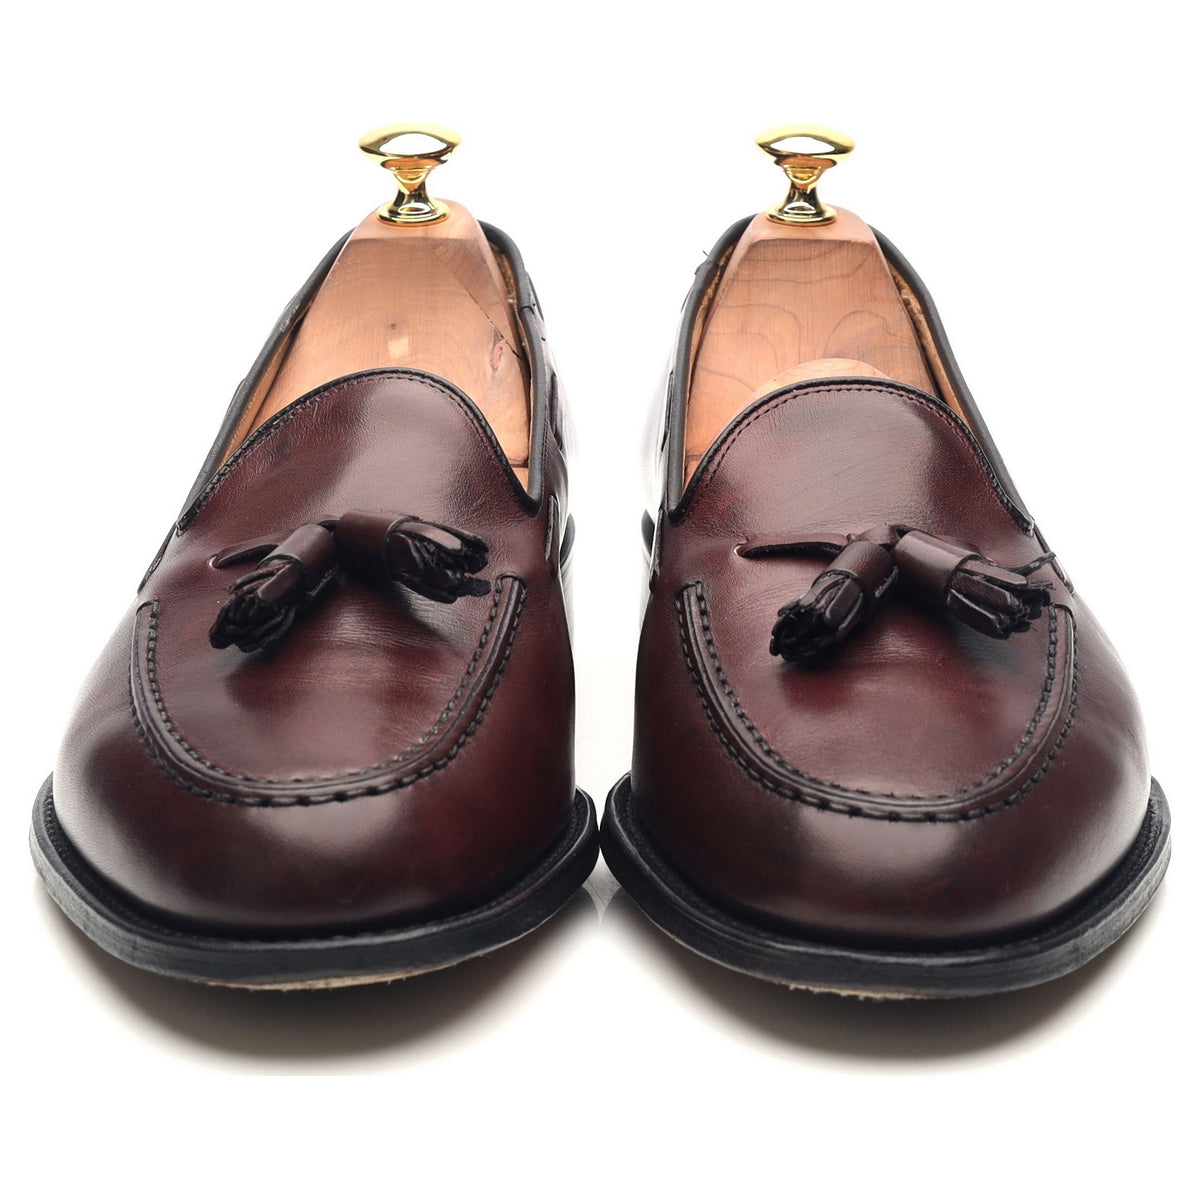 Keats II' Burgundy Leather Tassel Loafers UK 9 G - Abbot's Shoes